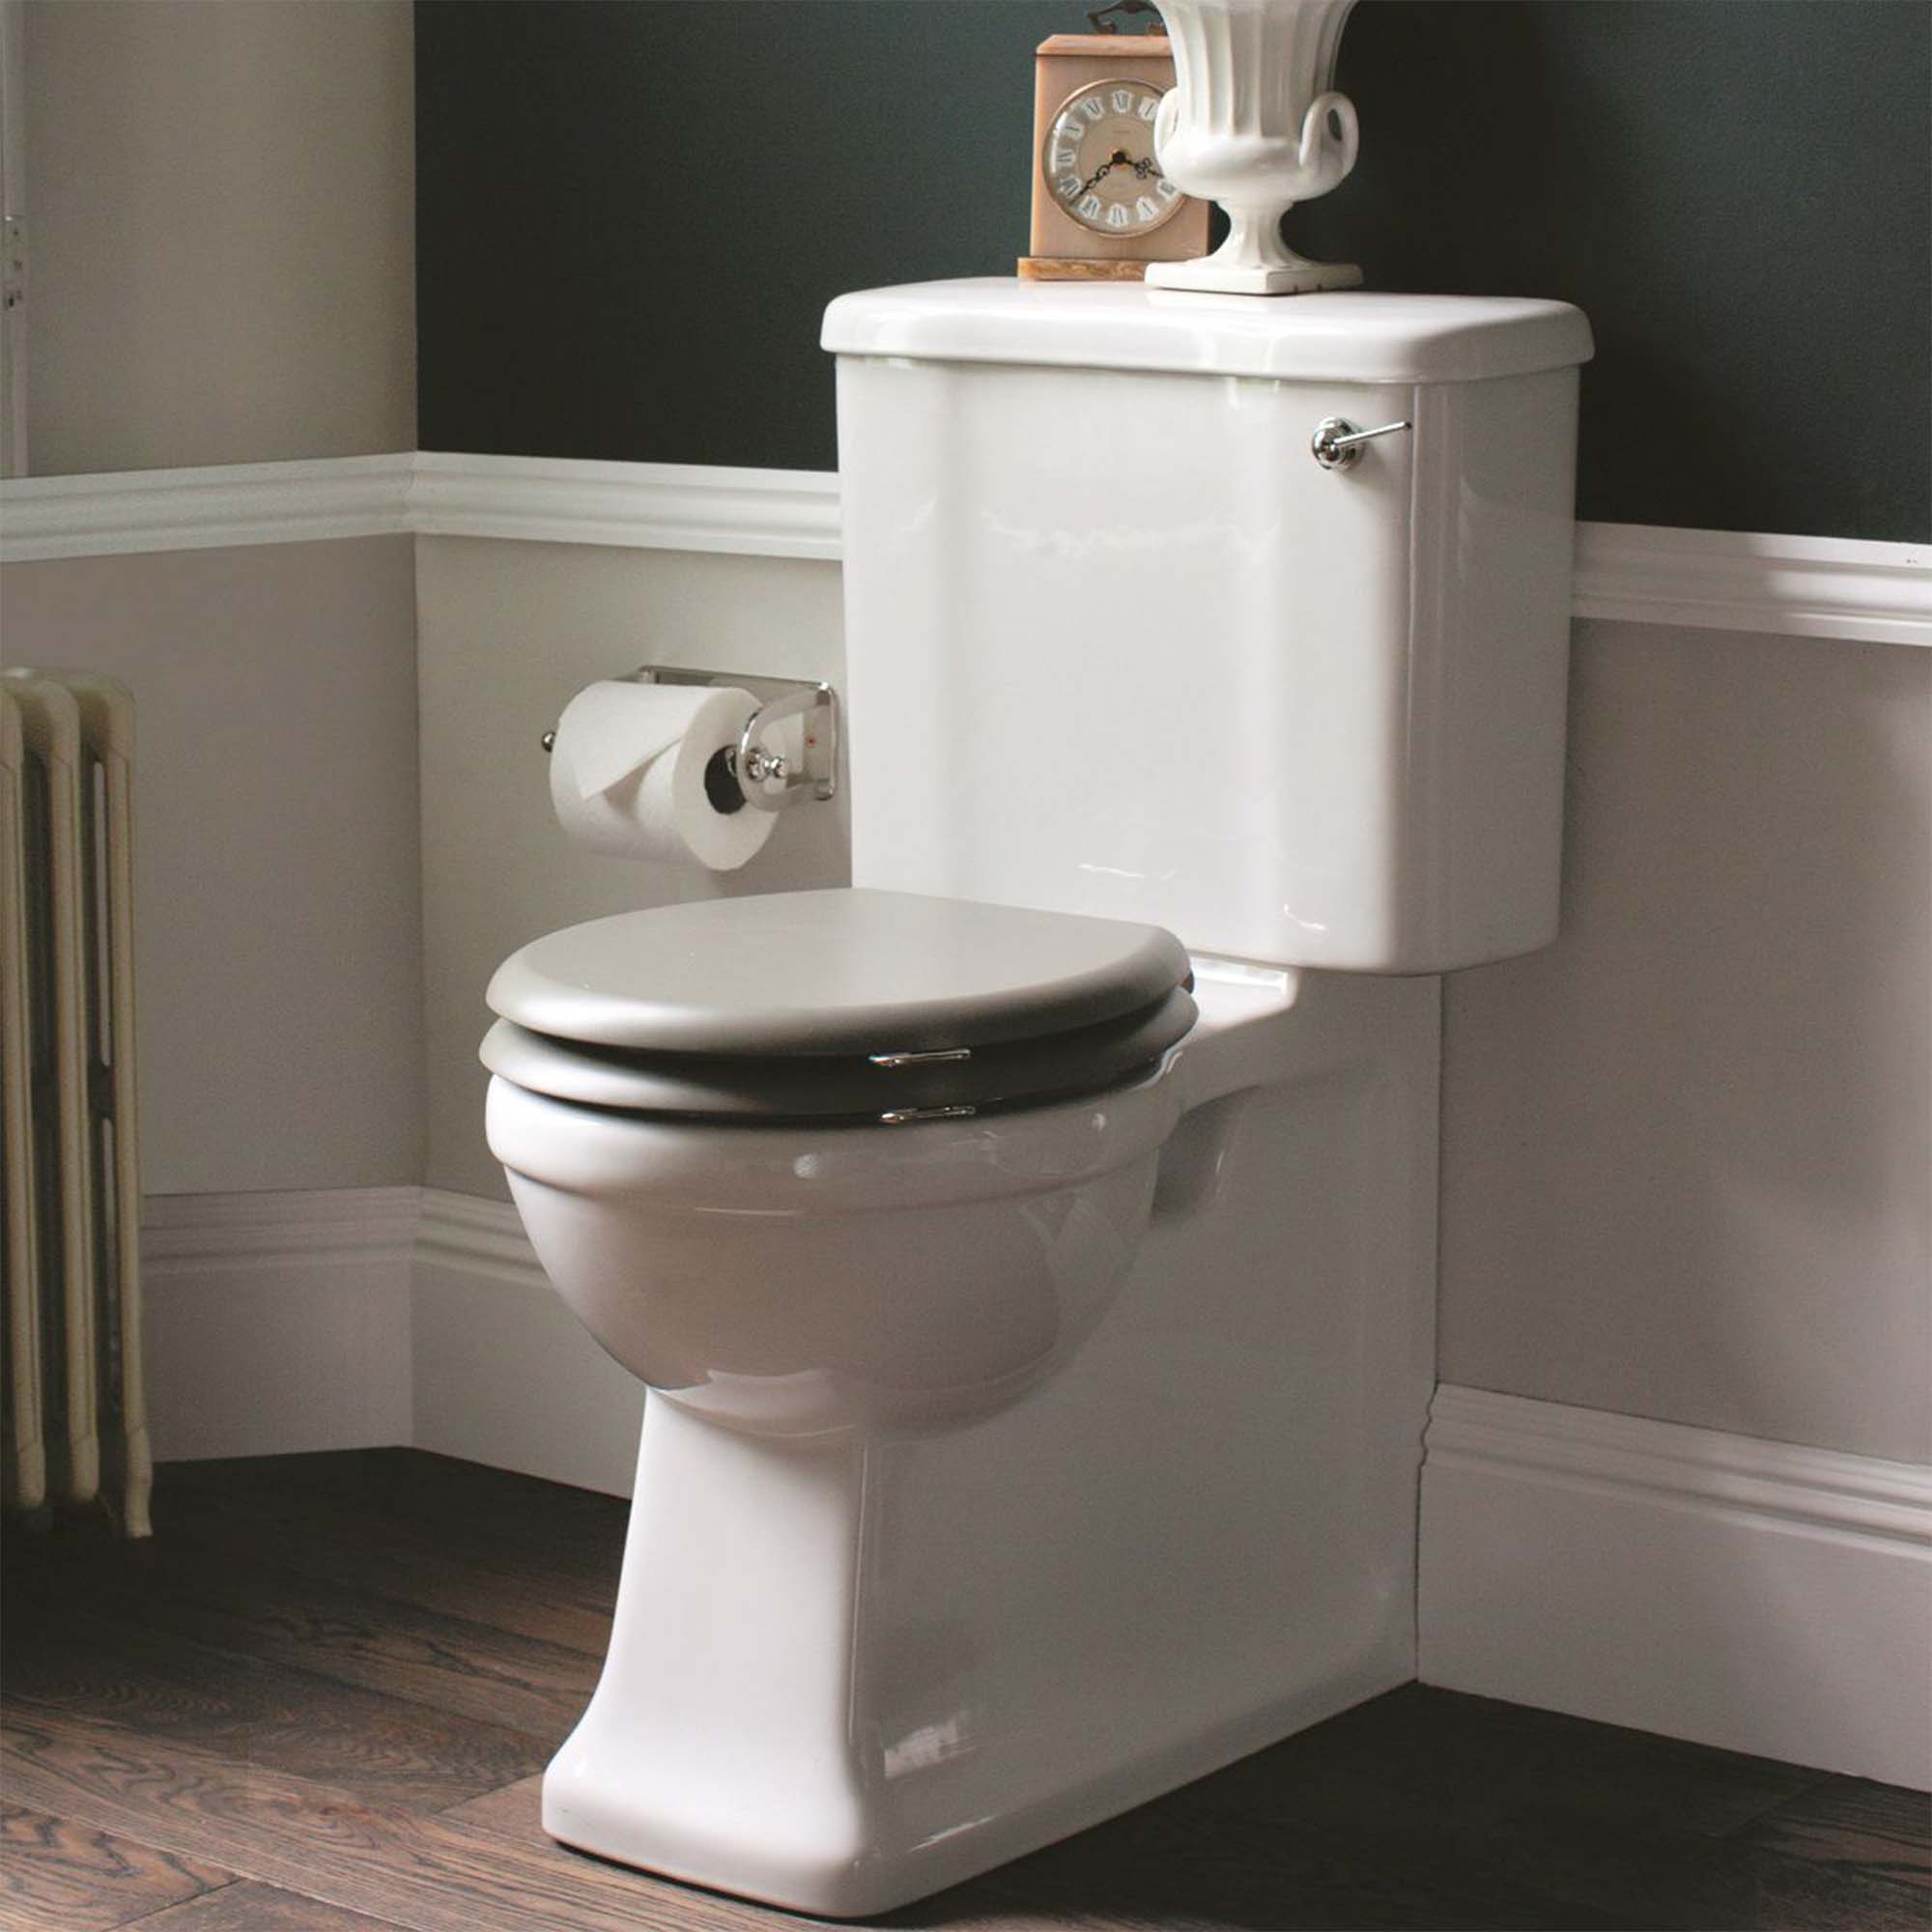 burlington arcade toilet seat dark olive with nickel hinges